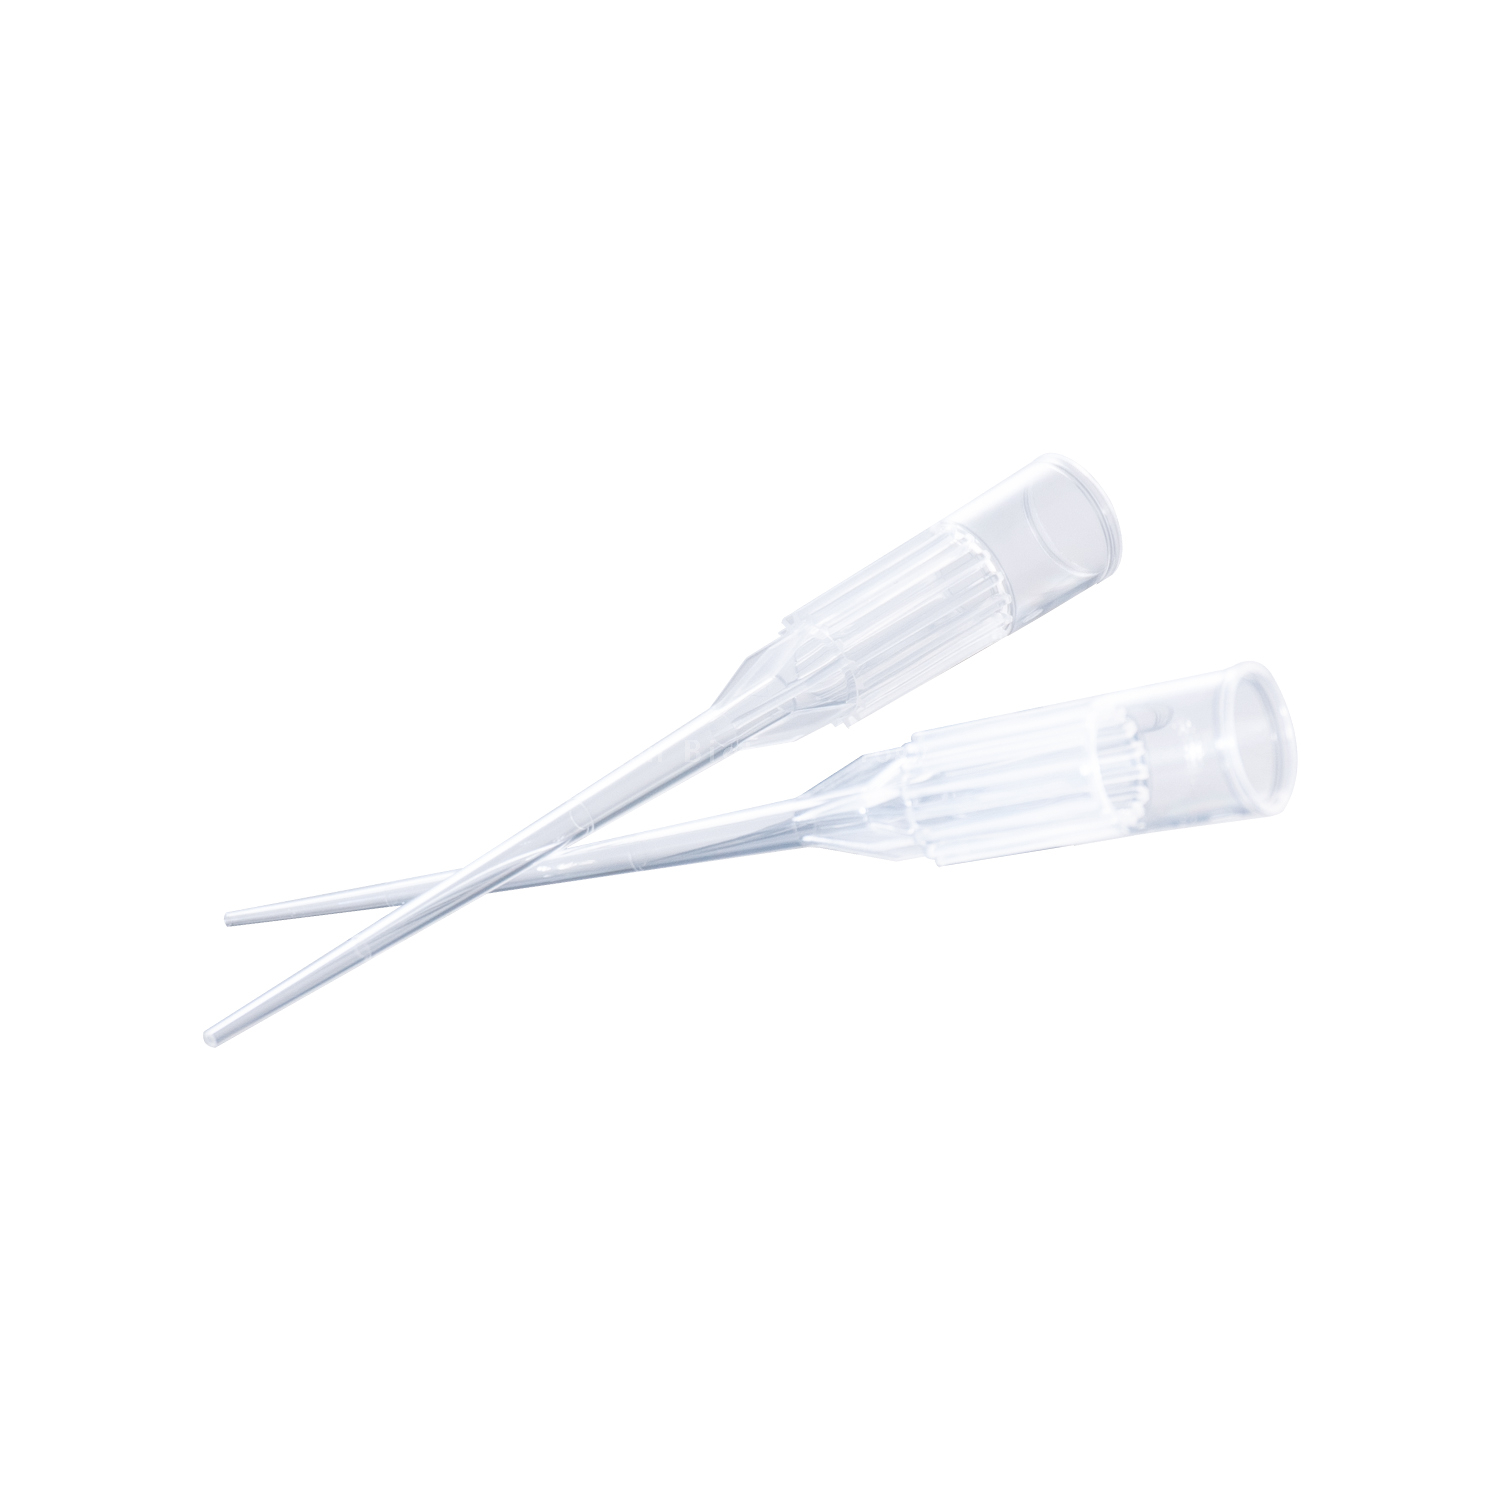 Sterilization 20uL Transparent Micropipette Tips Packed in Rack